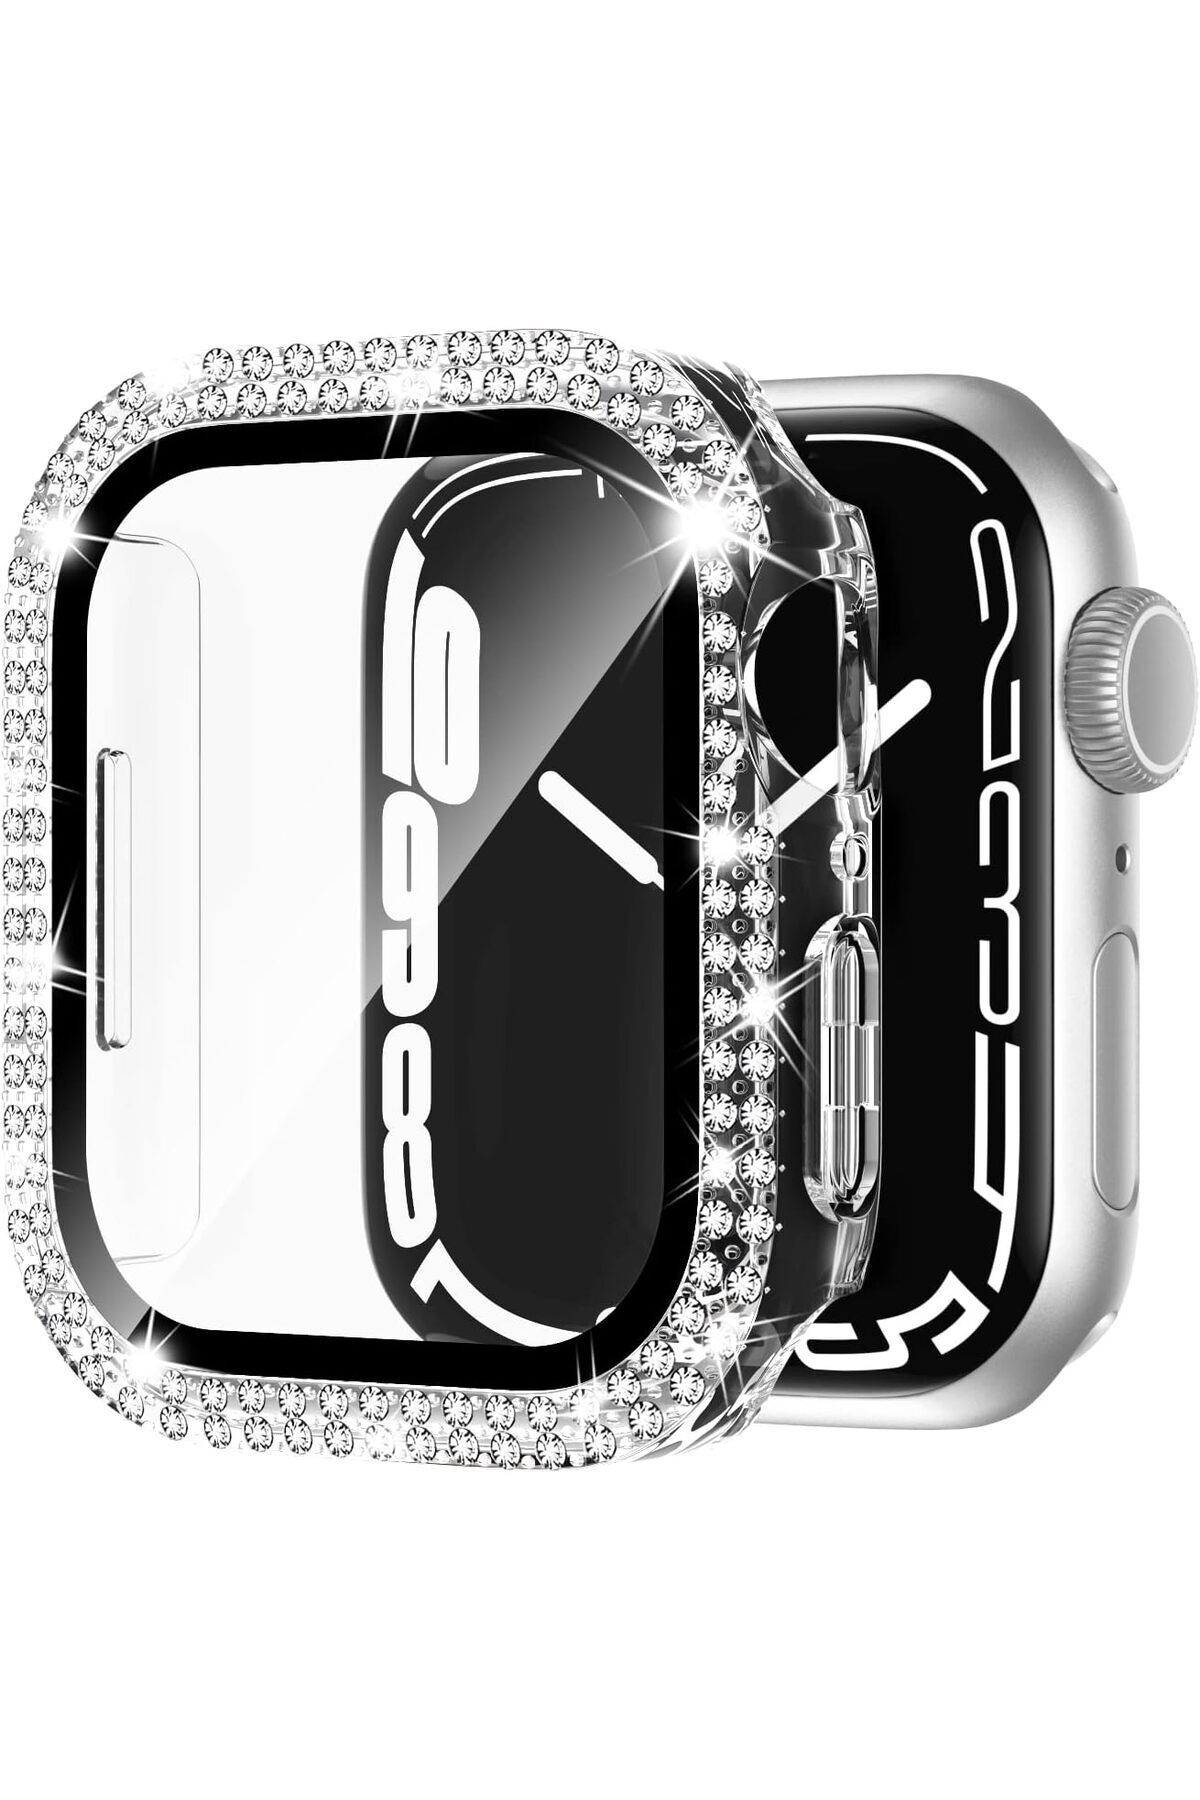 W wopiece Apple Watch 1 2 3 4 5 6 7 8 Se Serisi Uyumlu 44mm Taşlı DİAMOND 360 Tam Koruma Şeffaf Silikon Kılıf